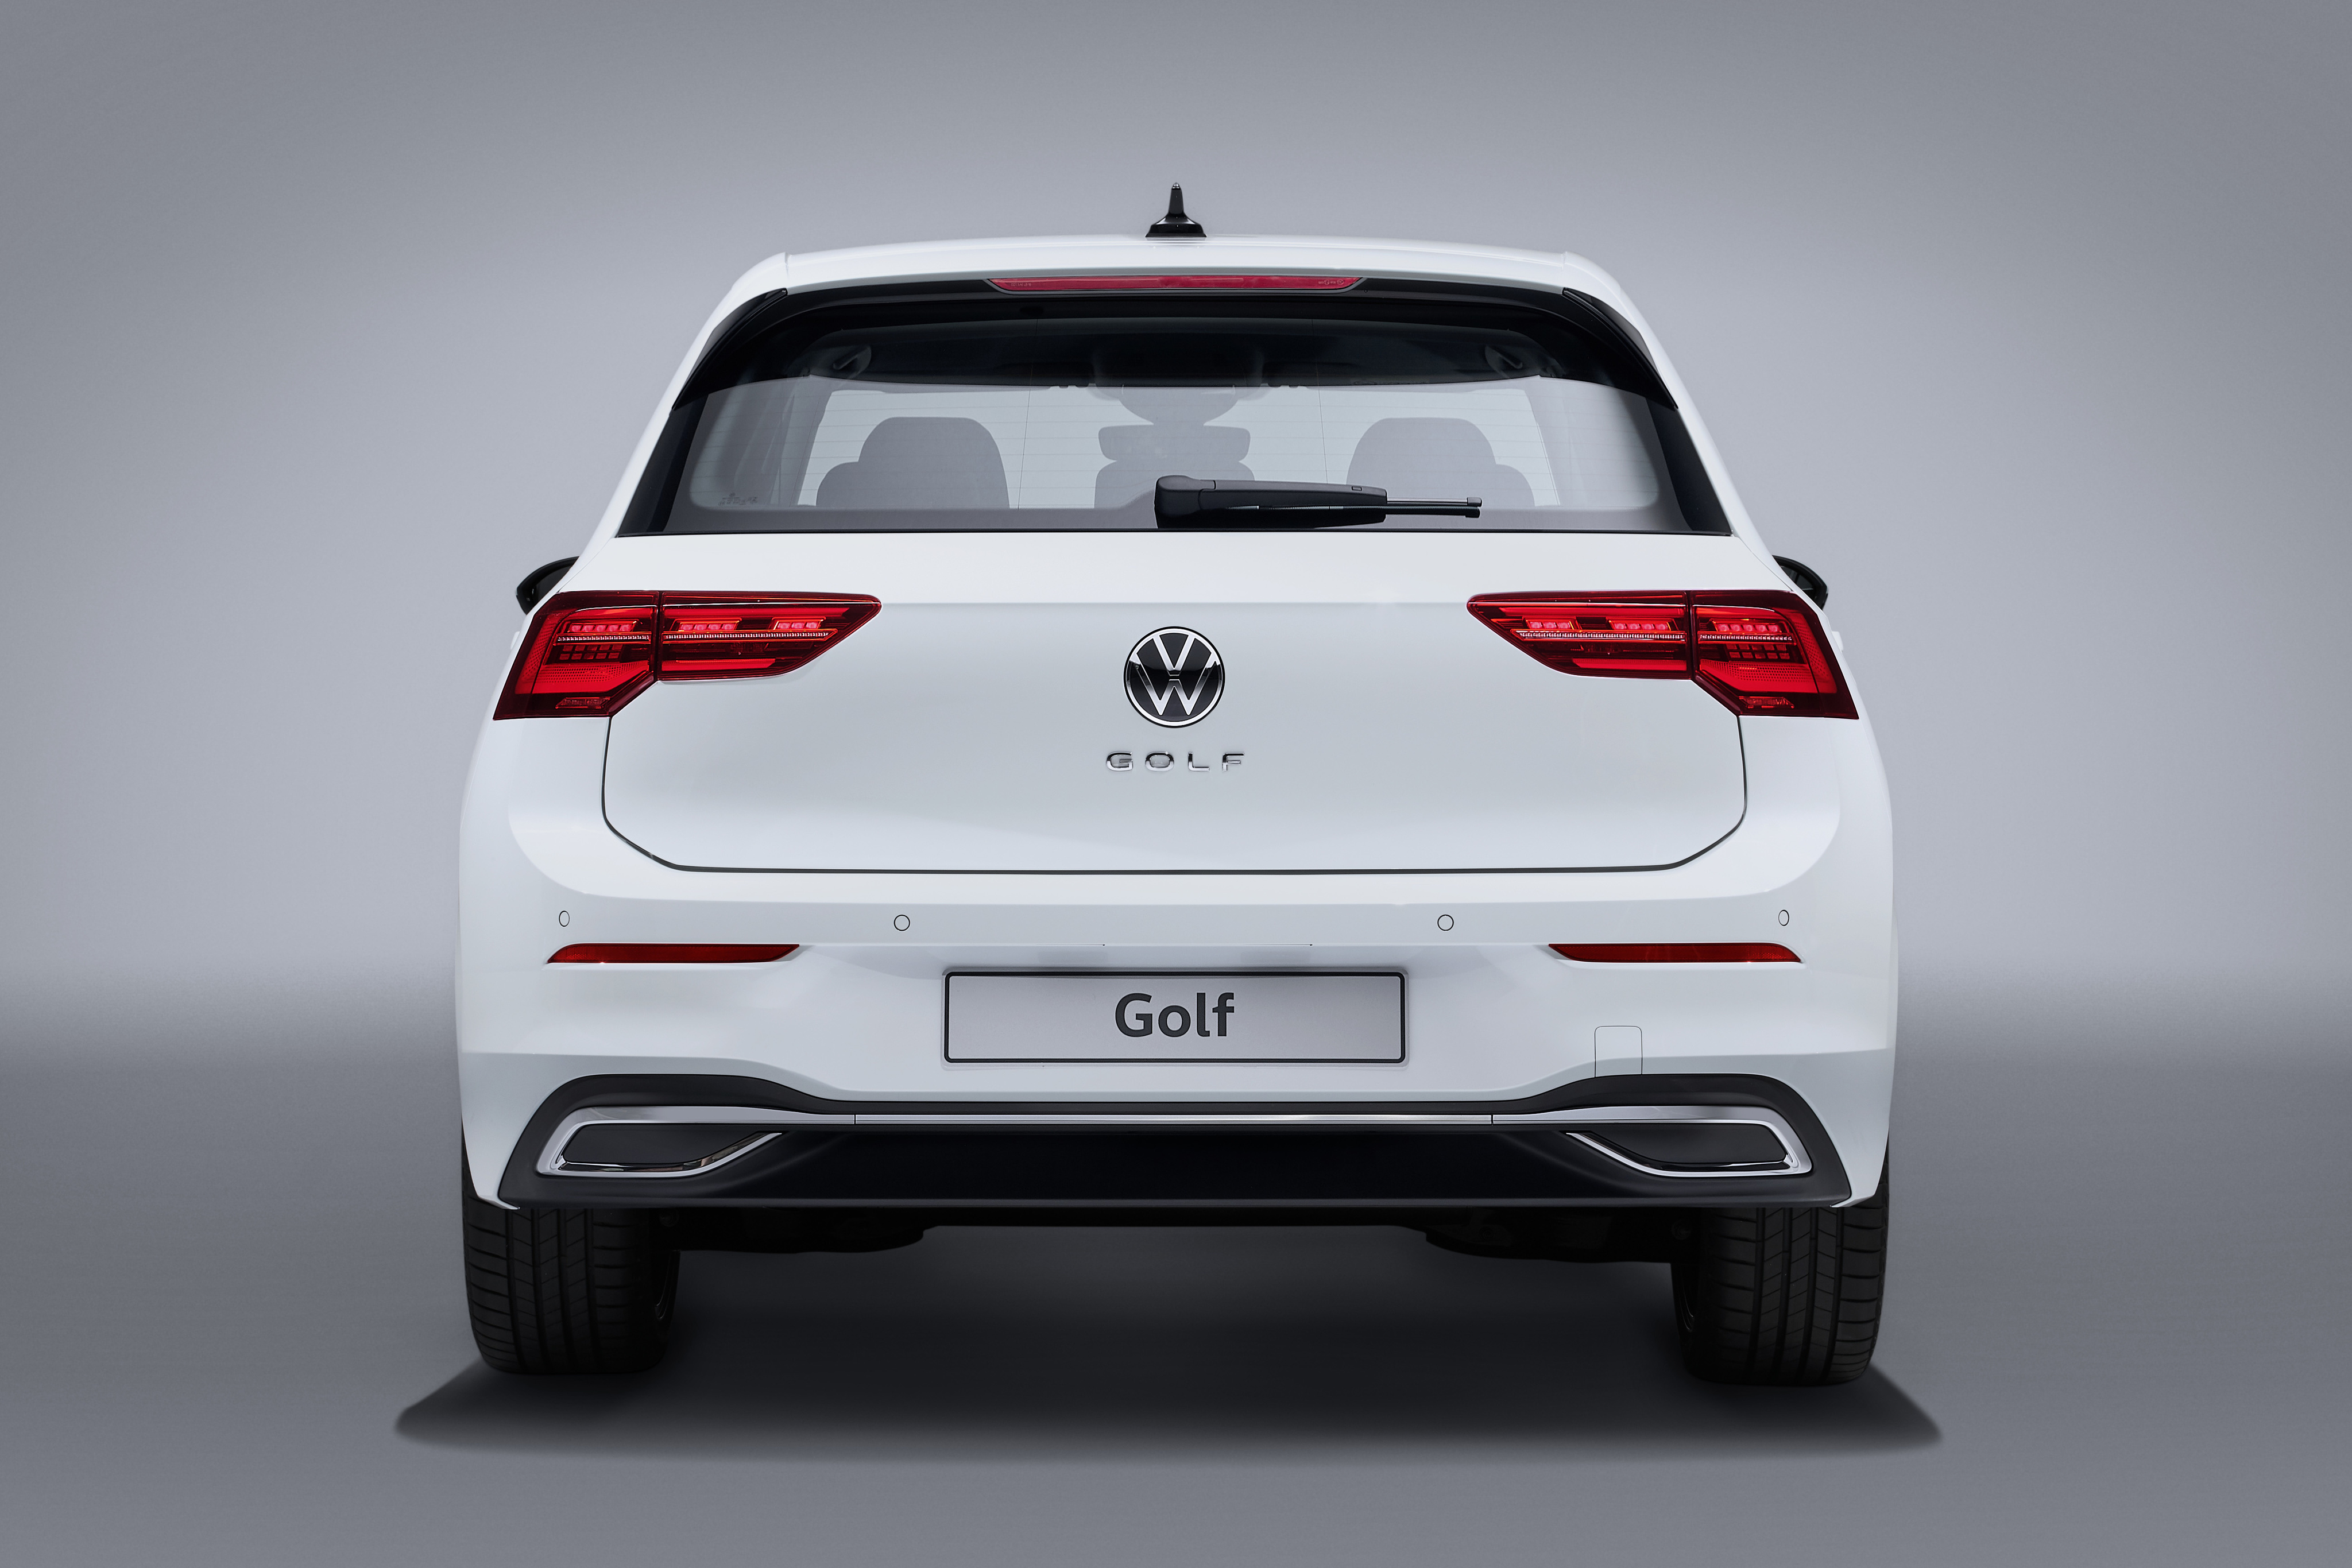 Volkswagen Golf Mk8